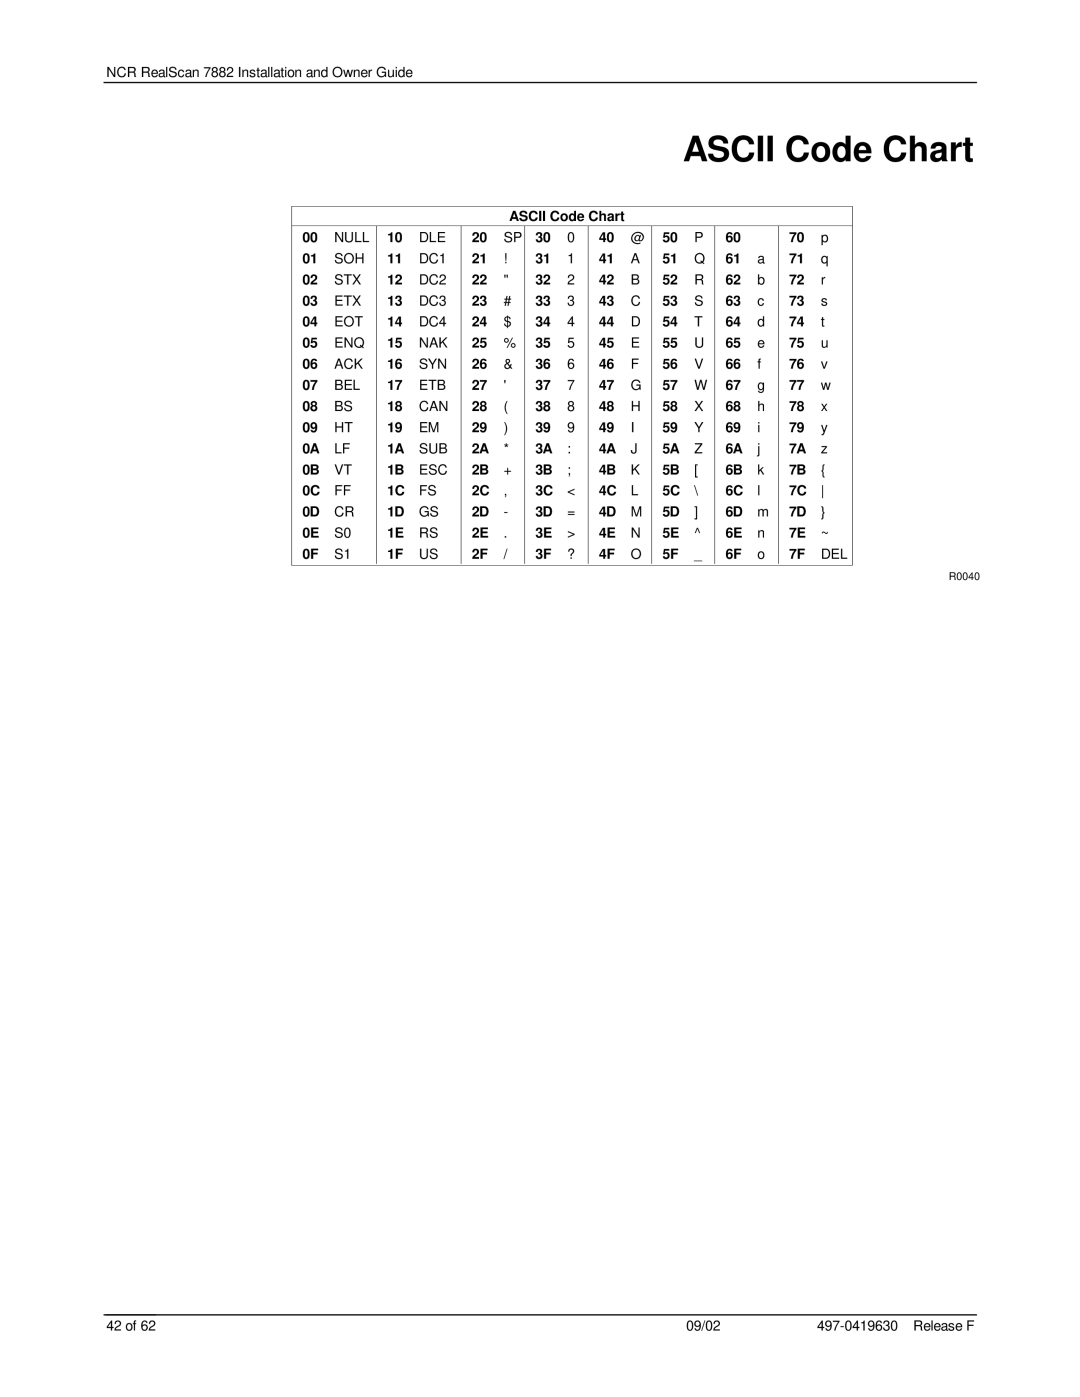 NCR 7882 manual ASCII Code Chart, R0040 